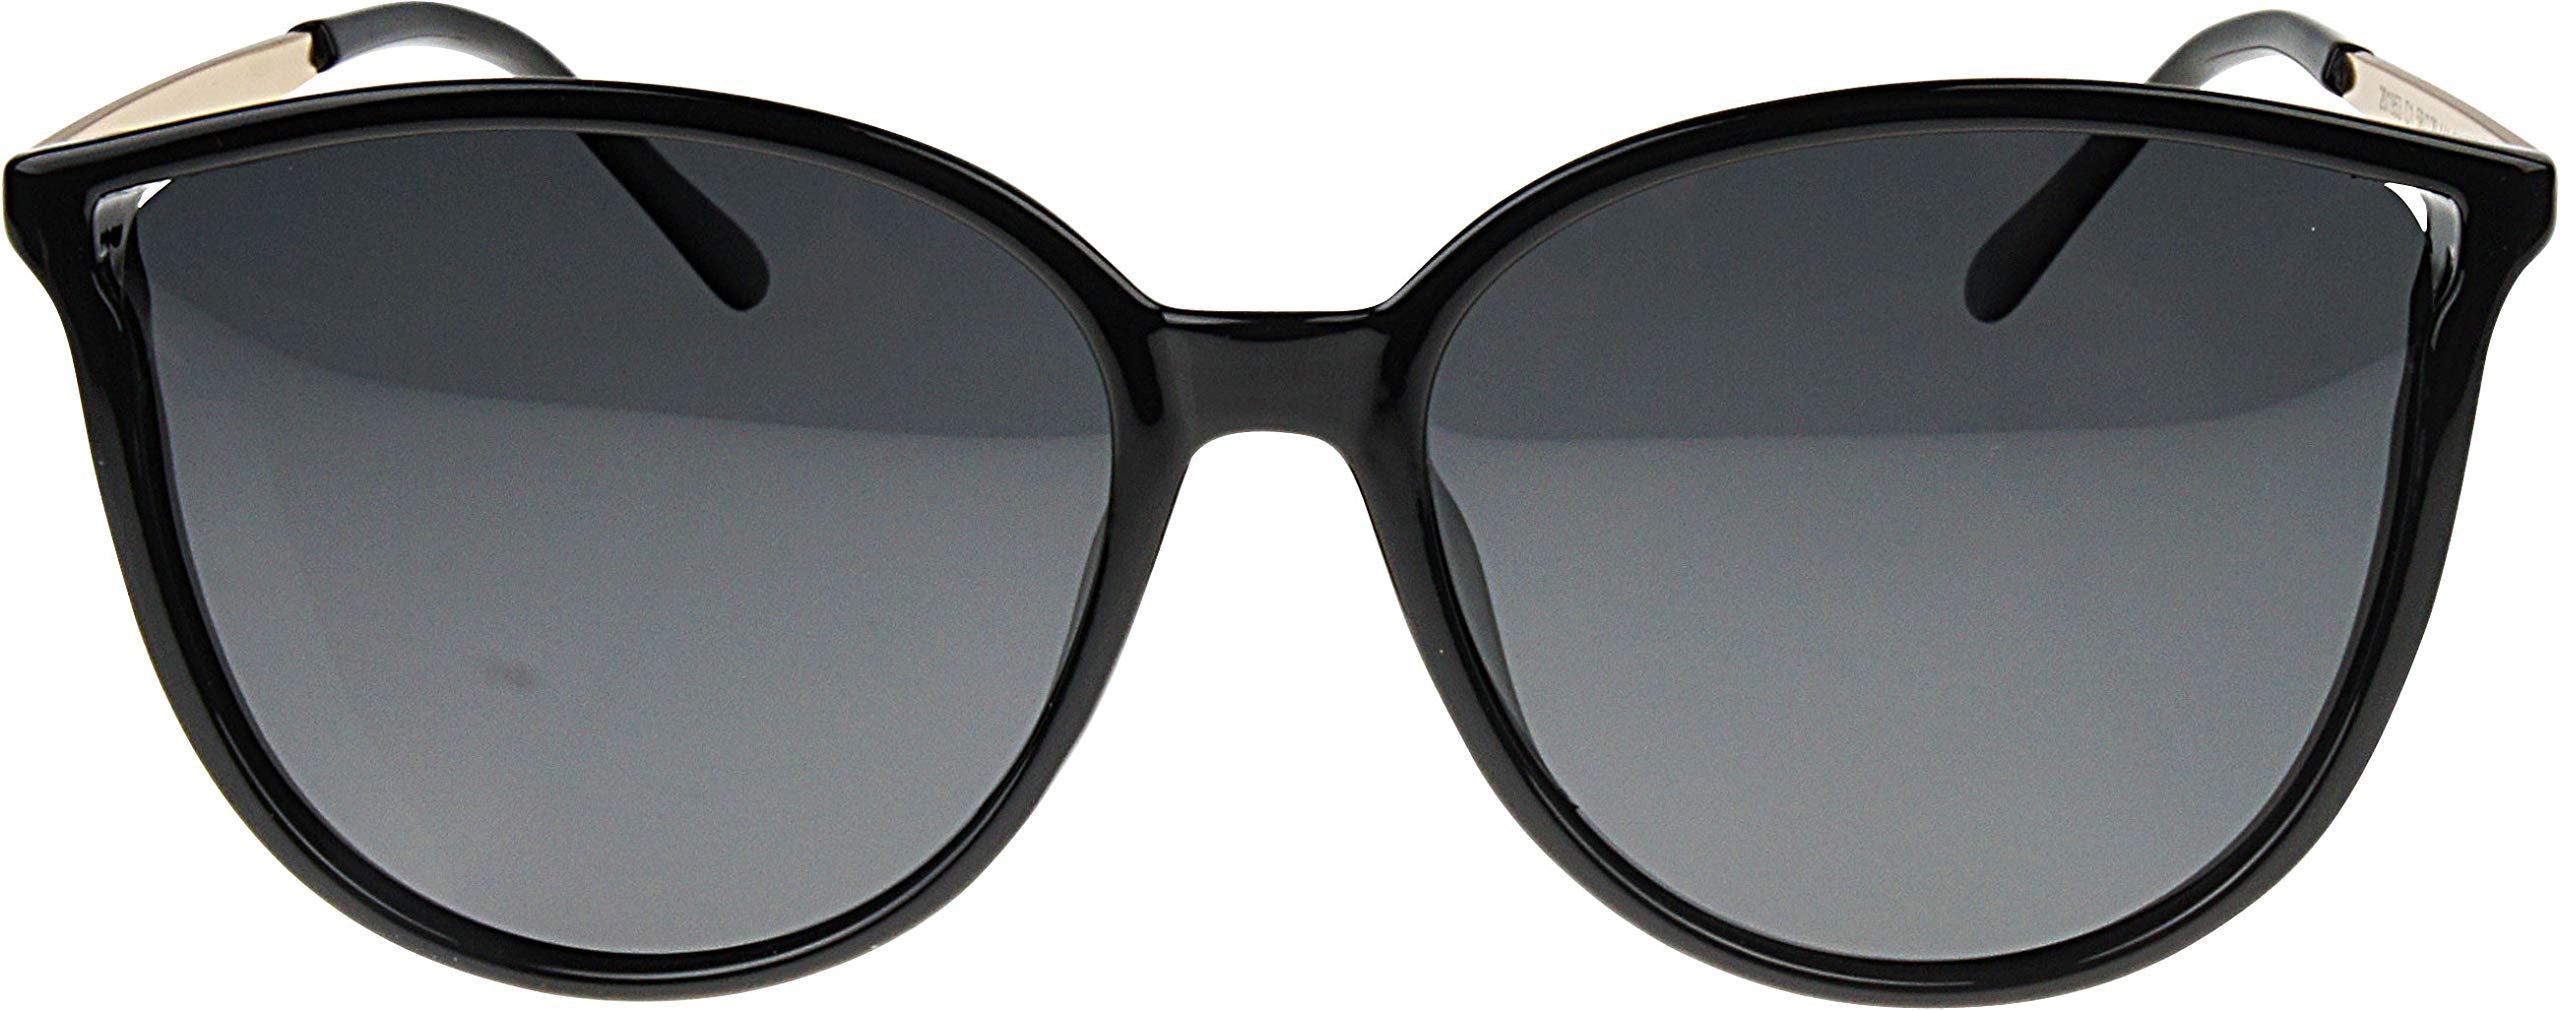 Retro Vintage Cateye Sunglasses for Women Metal Frame Shades